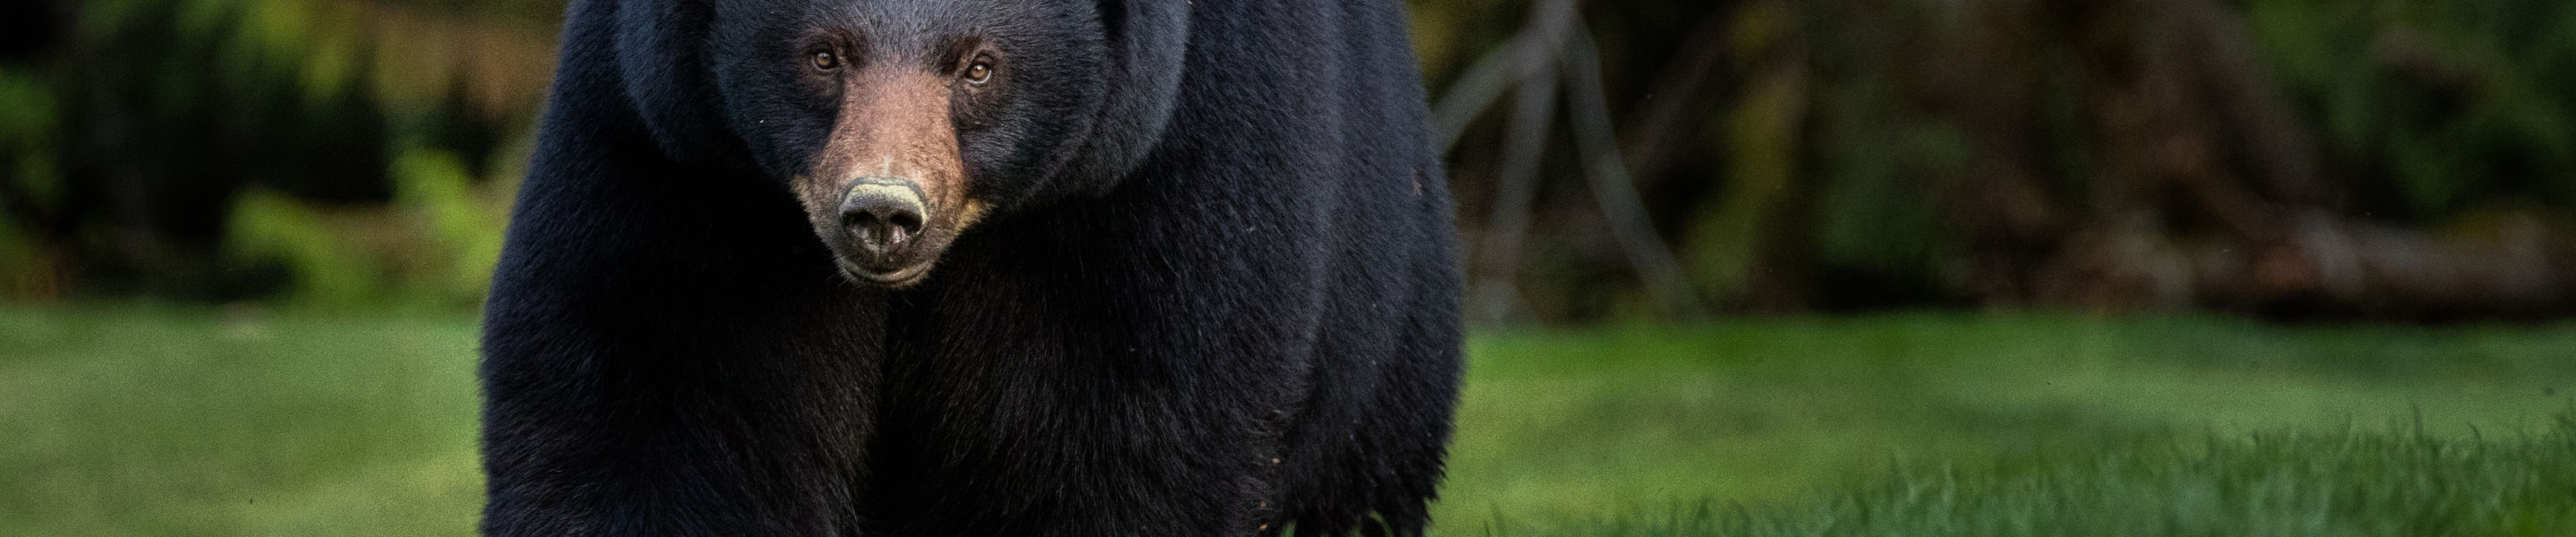 Black Bear Walks Through Grassy Field at Whistler Blackcomb During Summer